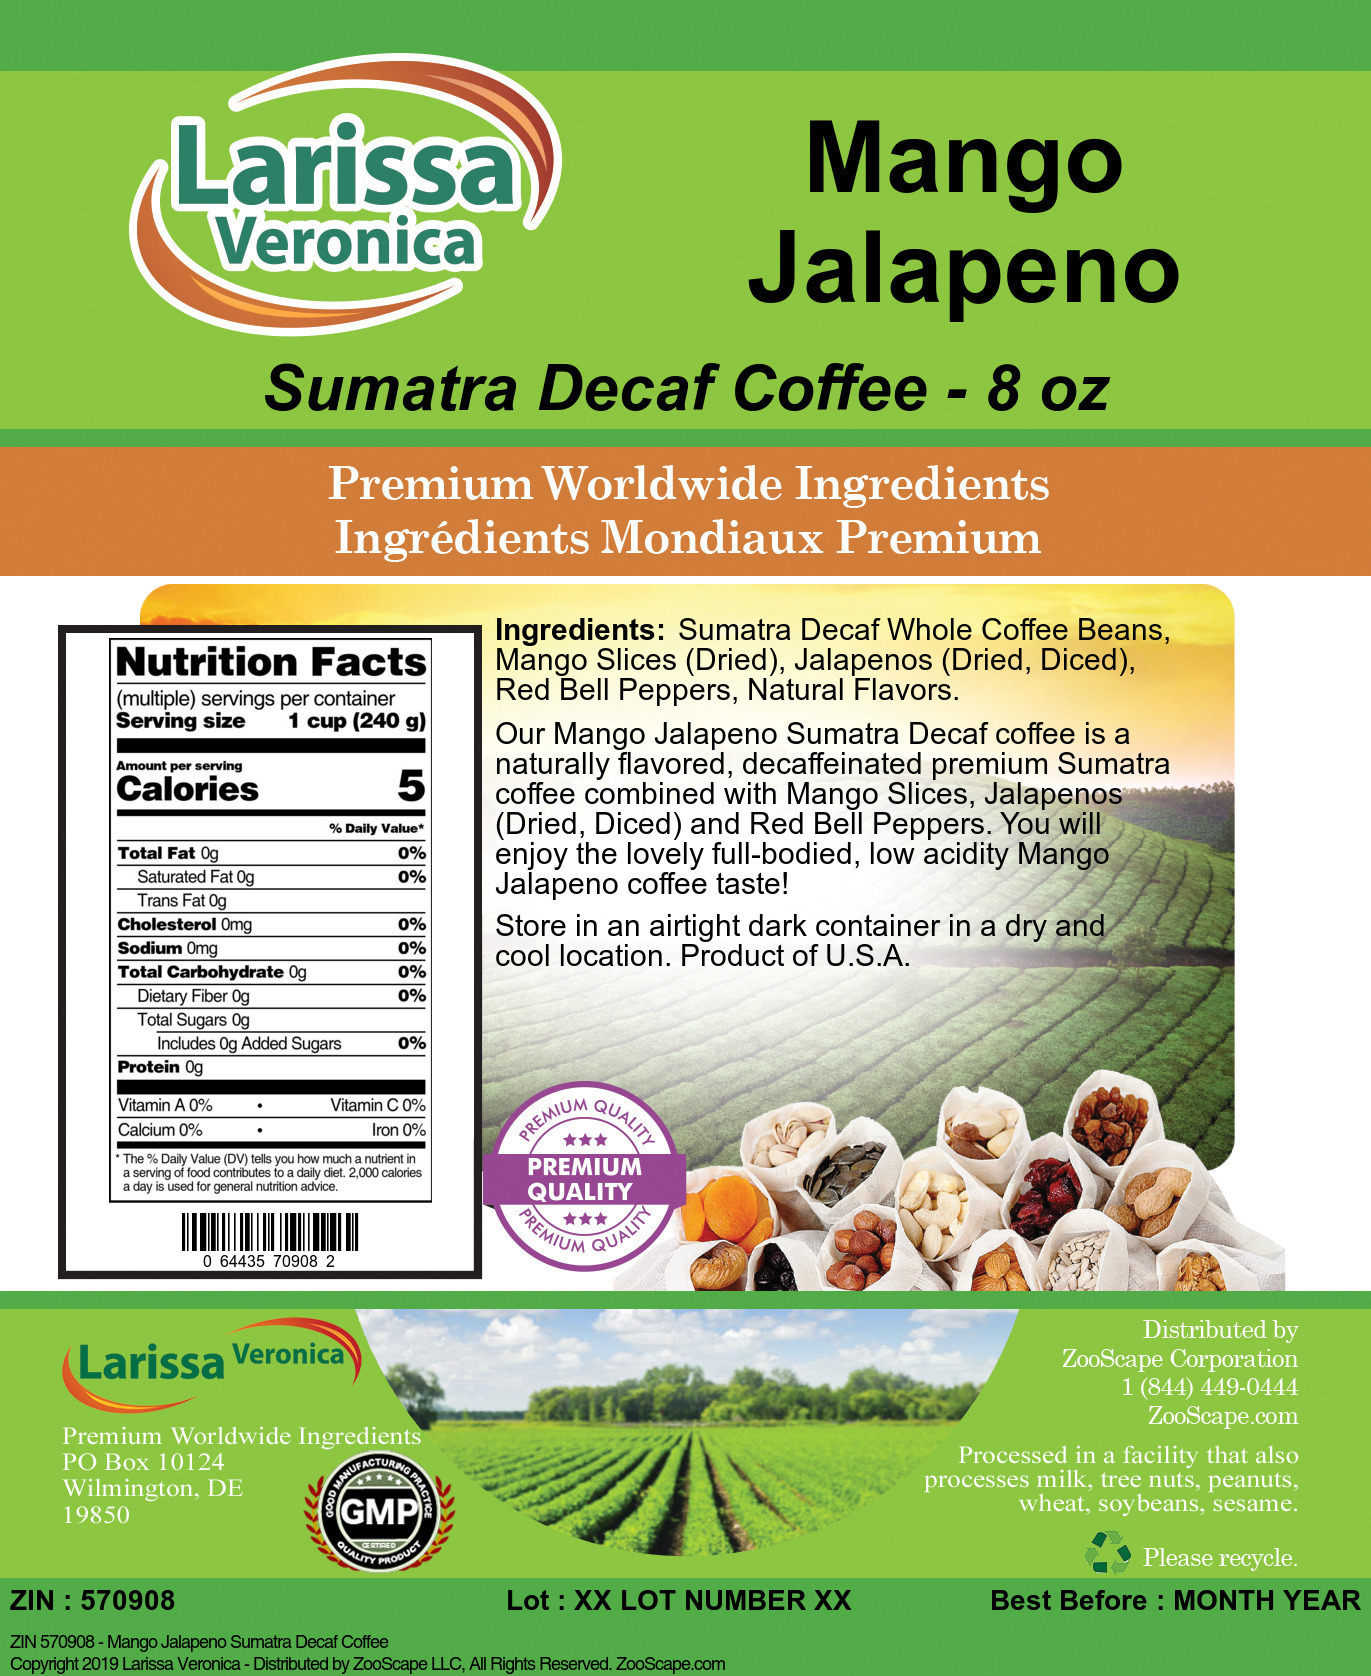 Mango Jalapeno Sumatra Decaf Coffee - Label